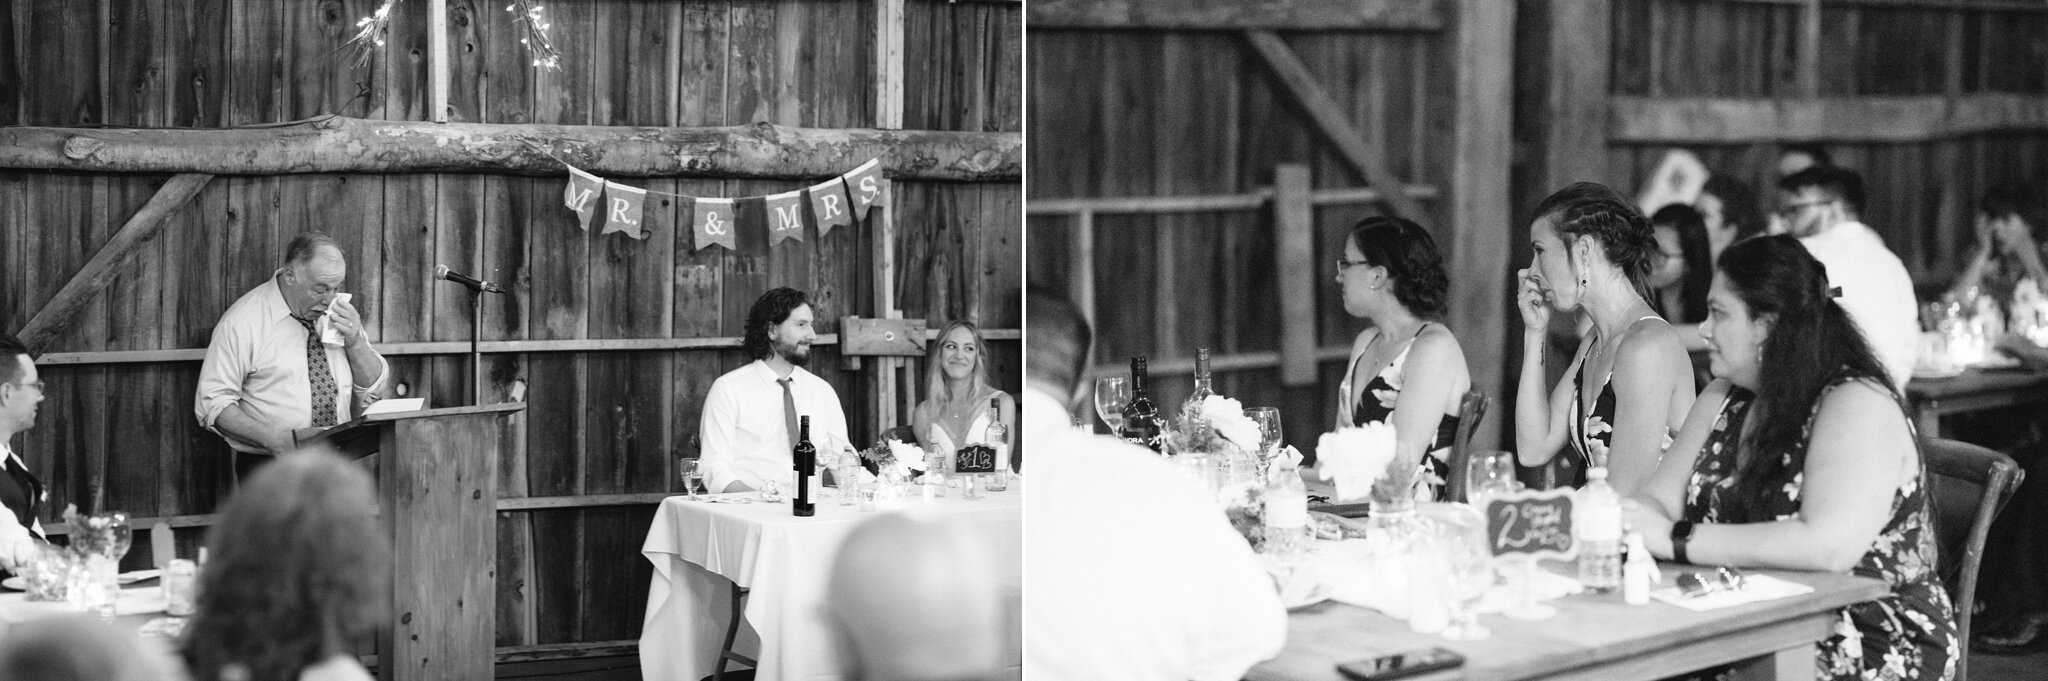 emotional wedding speeches barn